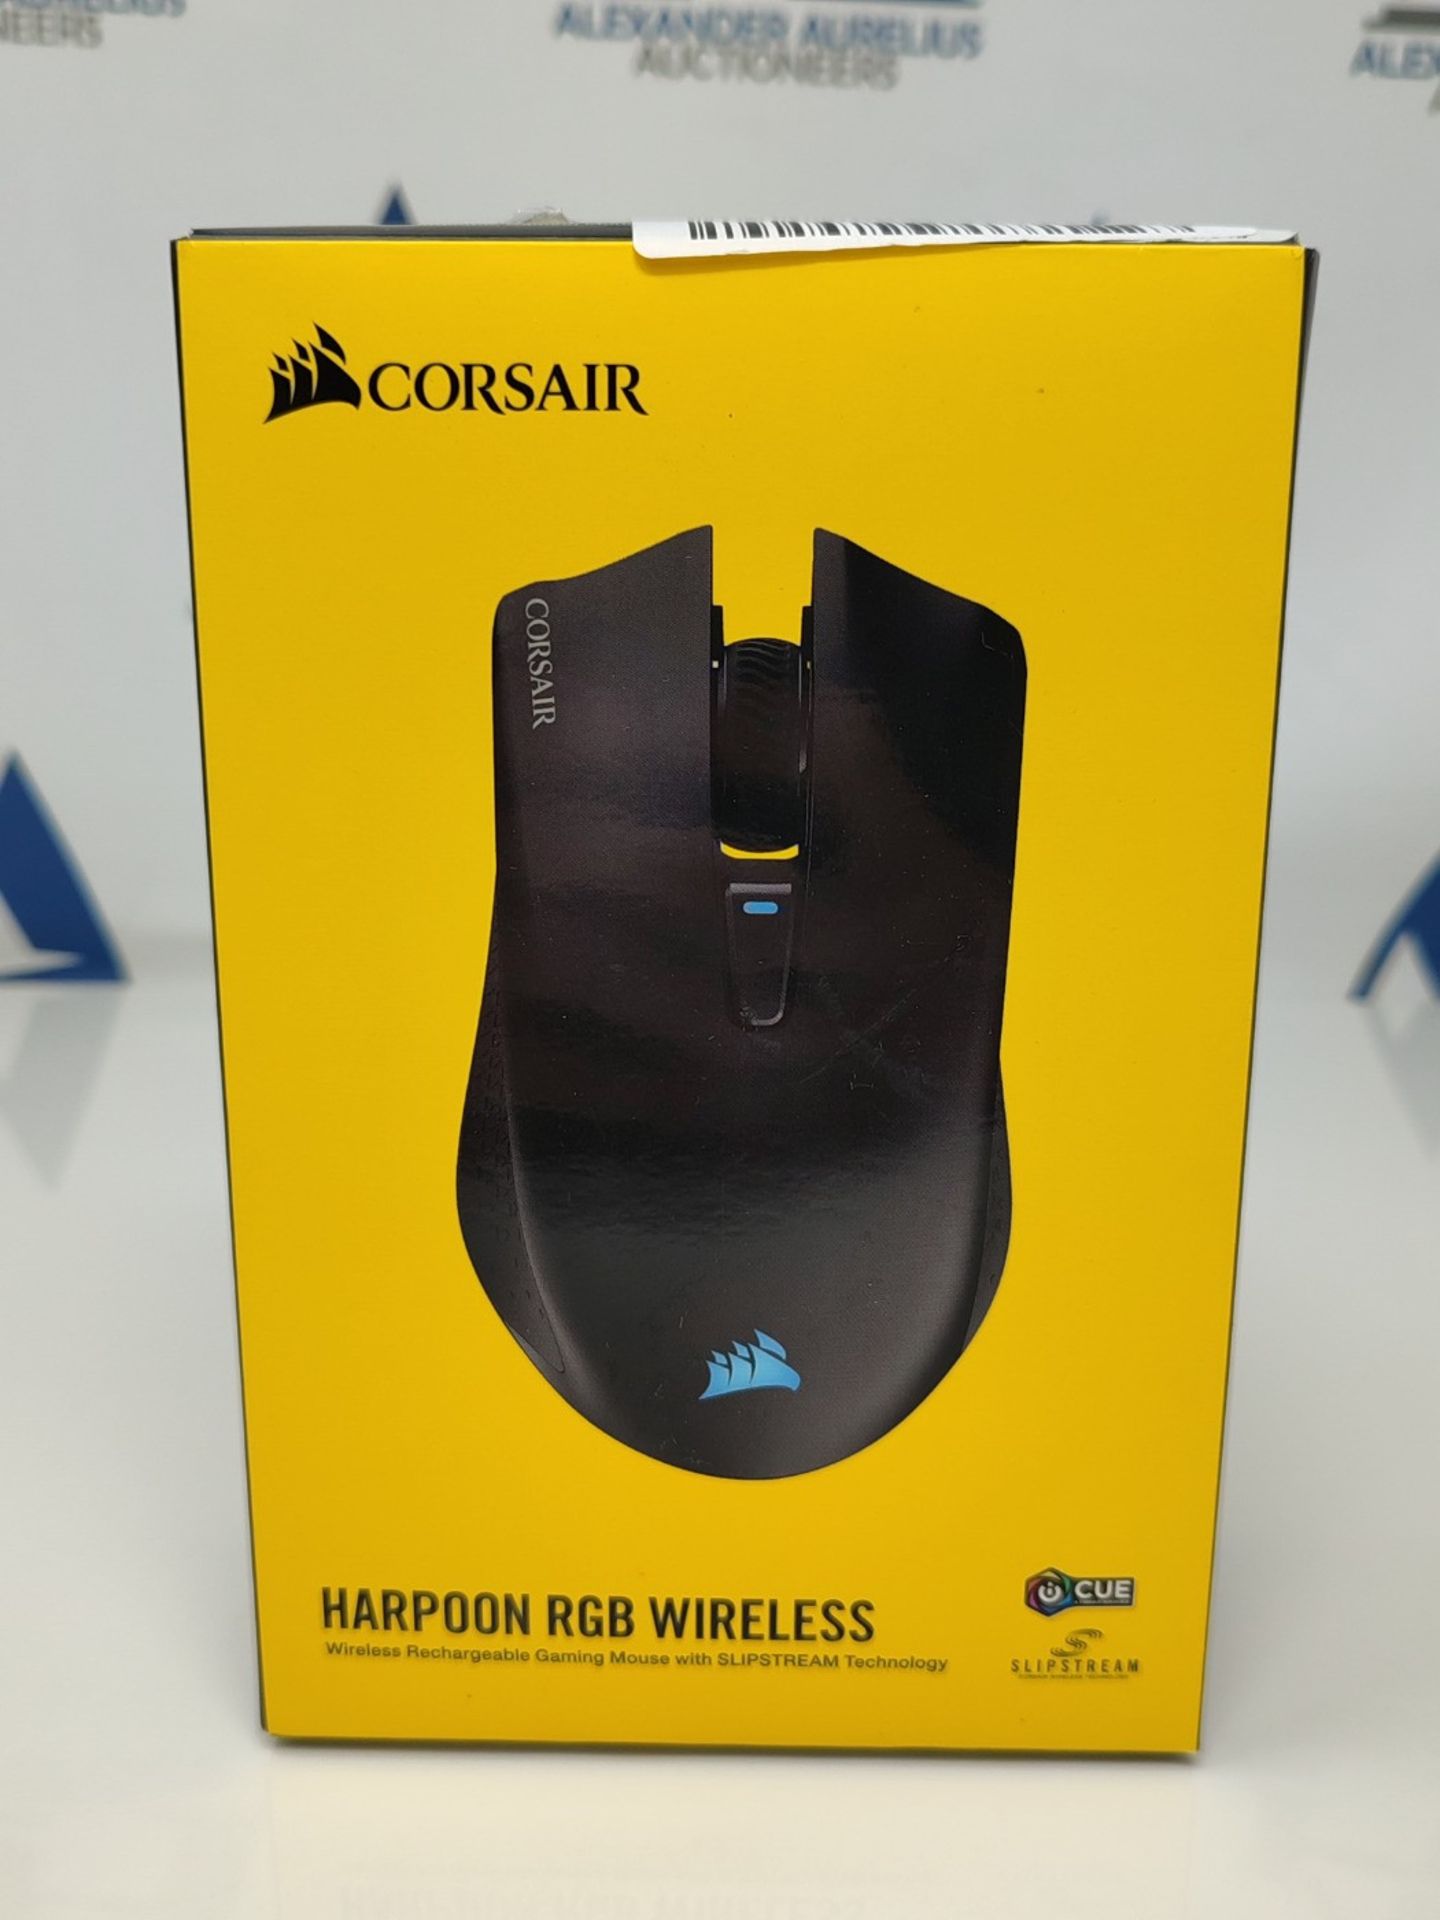 CORSAIR HARPOON WIRELESS RGB Lightweight FPS/MOBA Gaming Mouse - 10,000 DPI - 6 Progra - Image 2 of 3